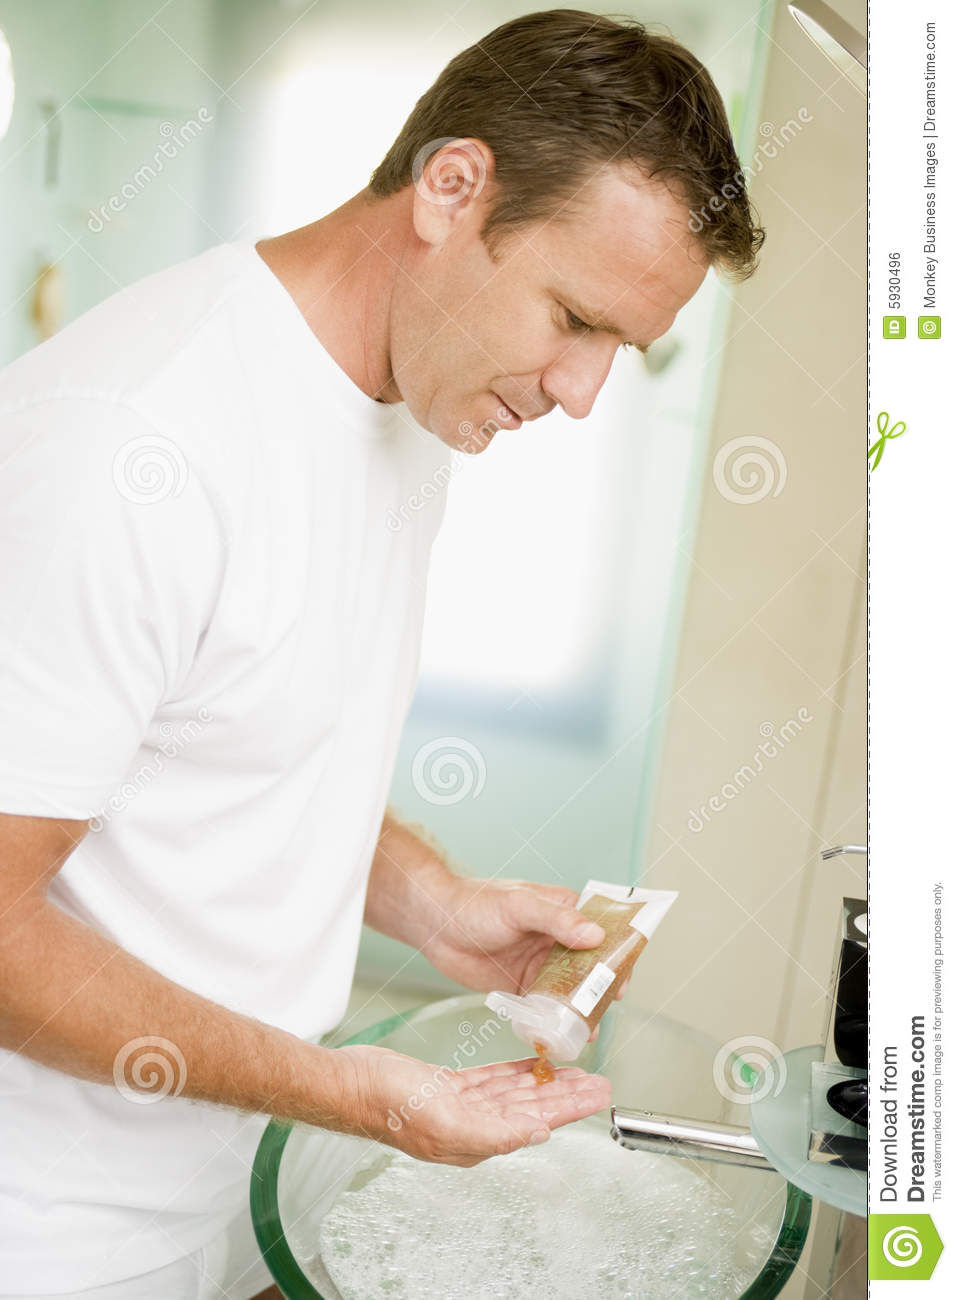 Man In Bathroom With Hair Gel Royalty Free Stock Image   Image